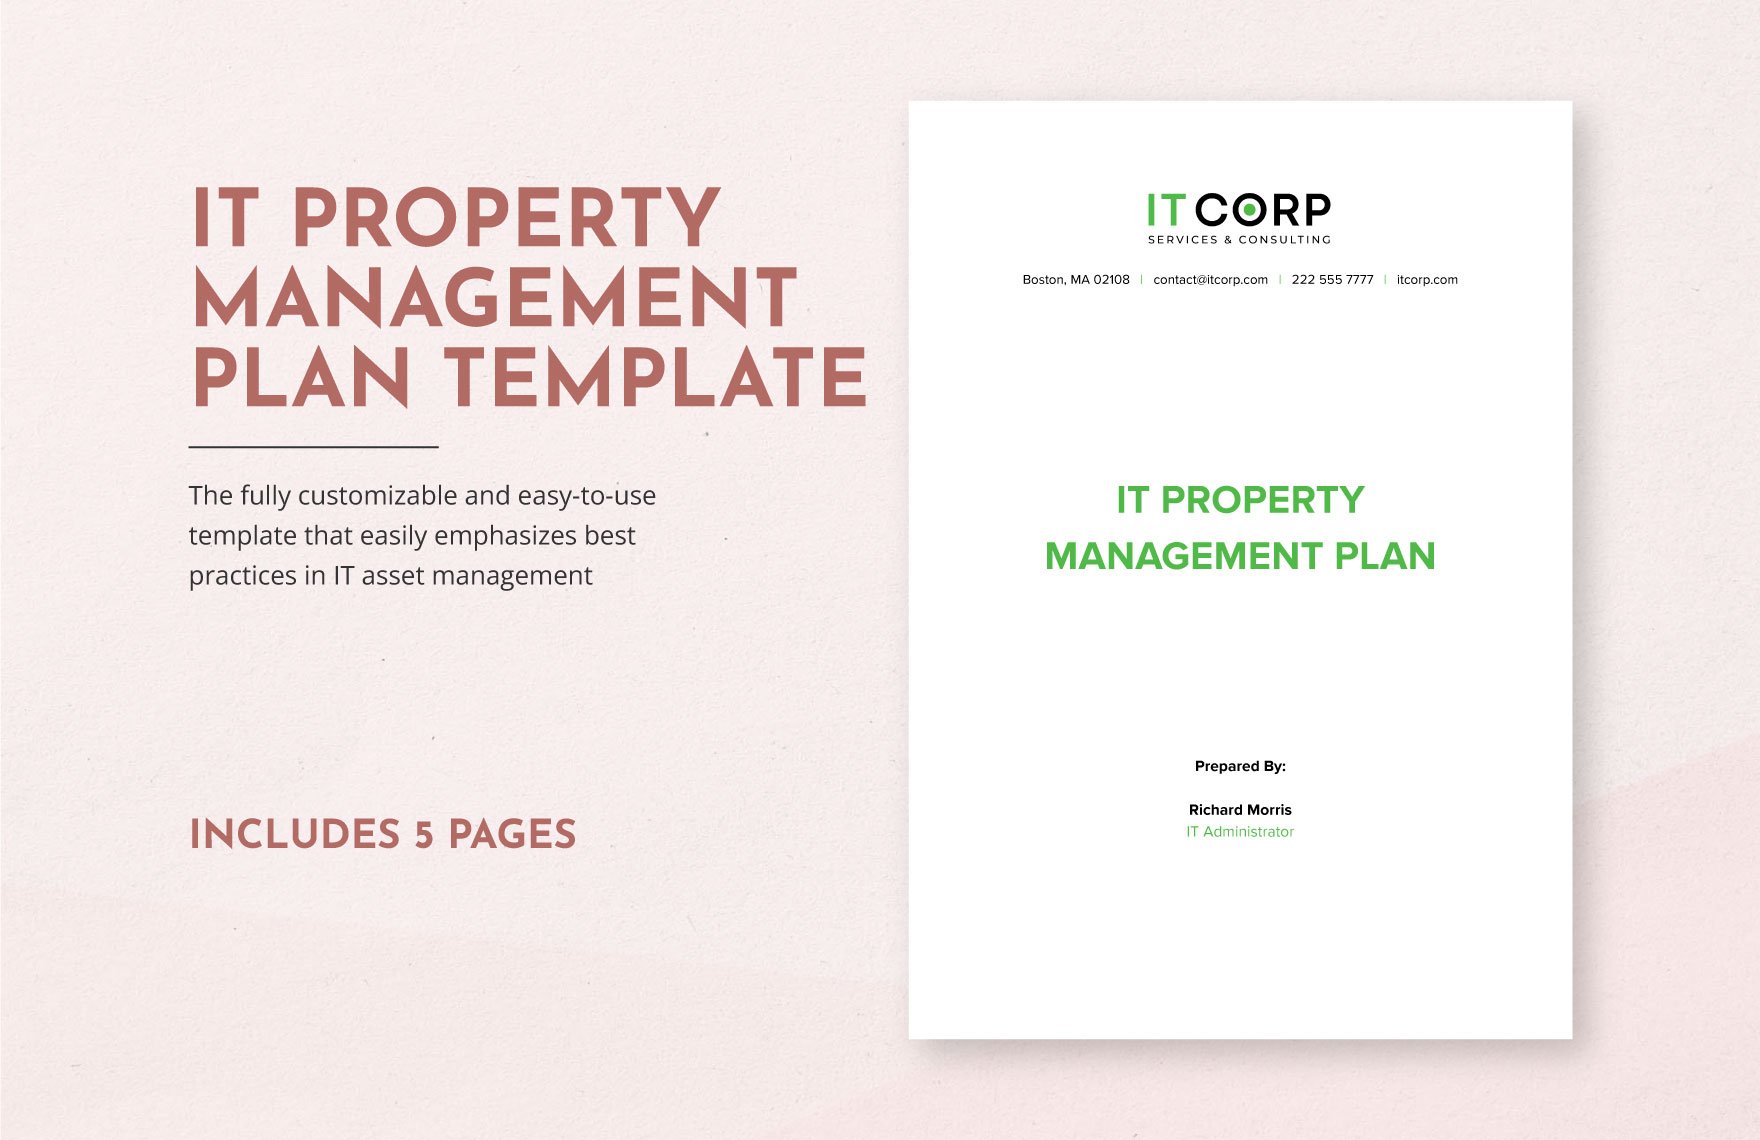 IT Property Management Plan Template